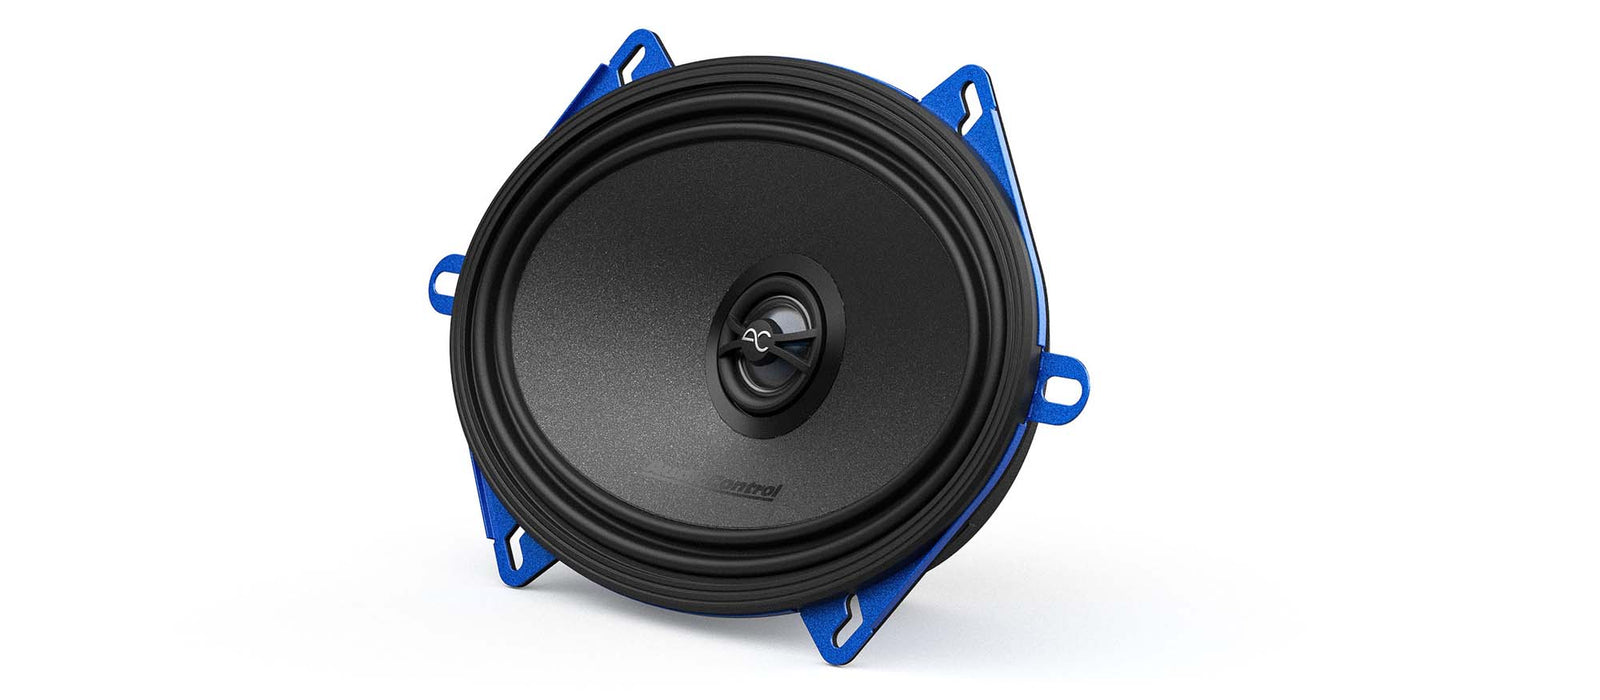 Audio Control PNW-57 pnw series 6 x 9″ high-fidelity coaxial speakers